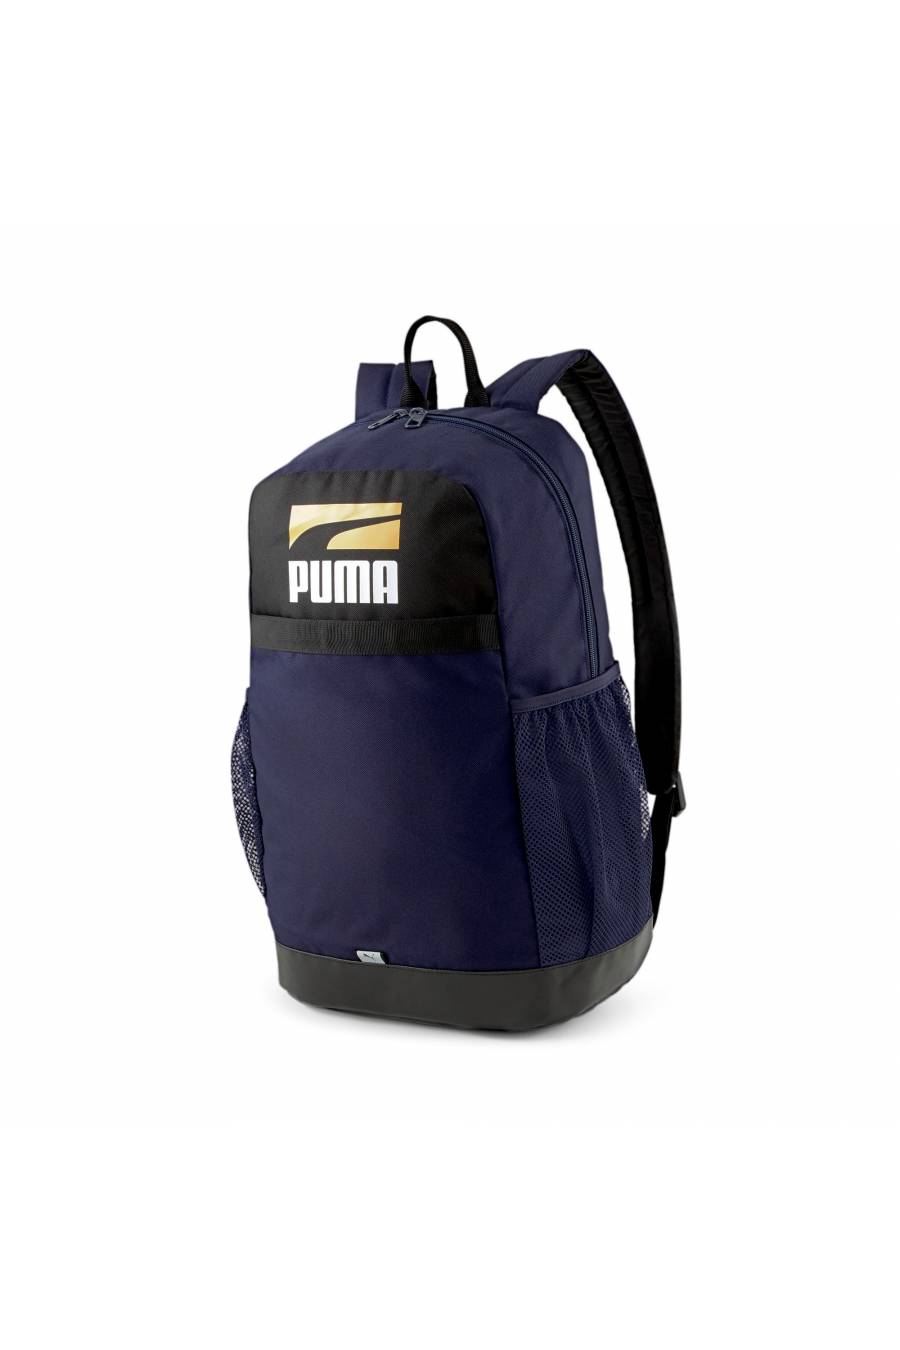 Mochila Puma Plus Backpack II Peacoat - Msdsport by Masdeporte